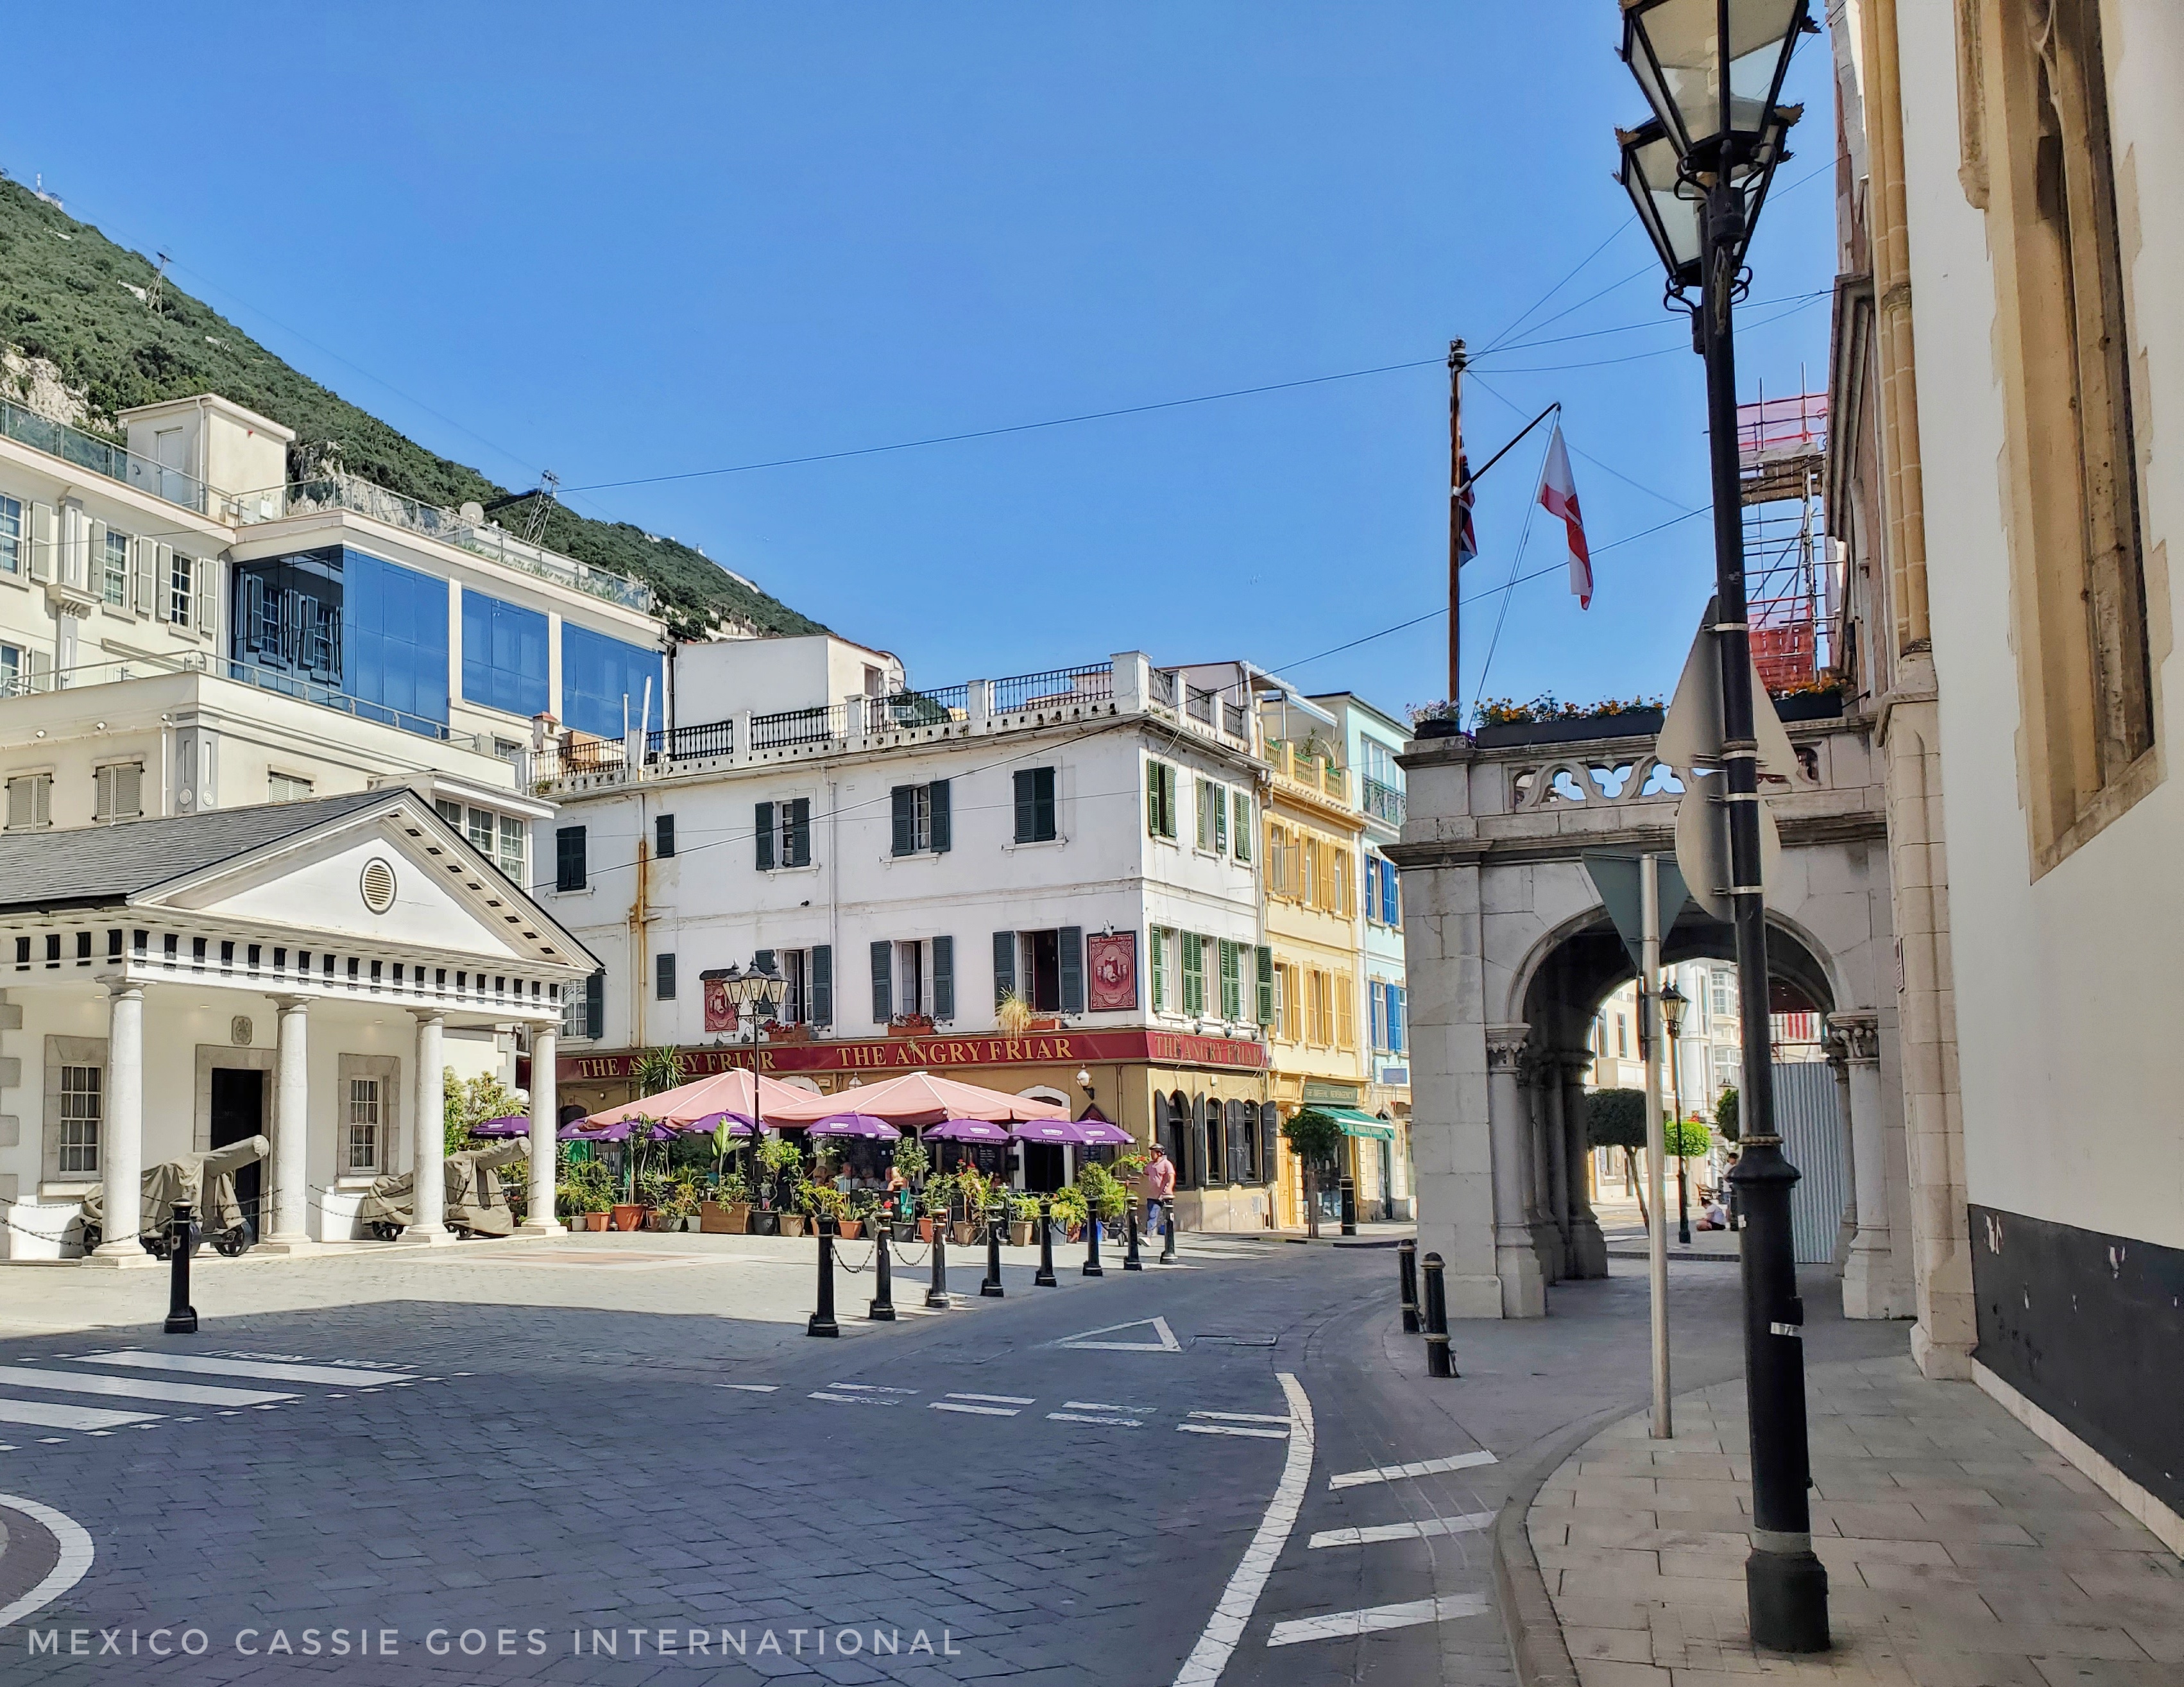 small plaza in gibraltar. white columned building on left